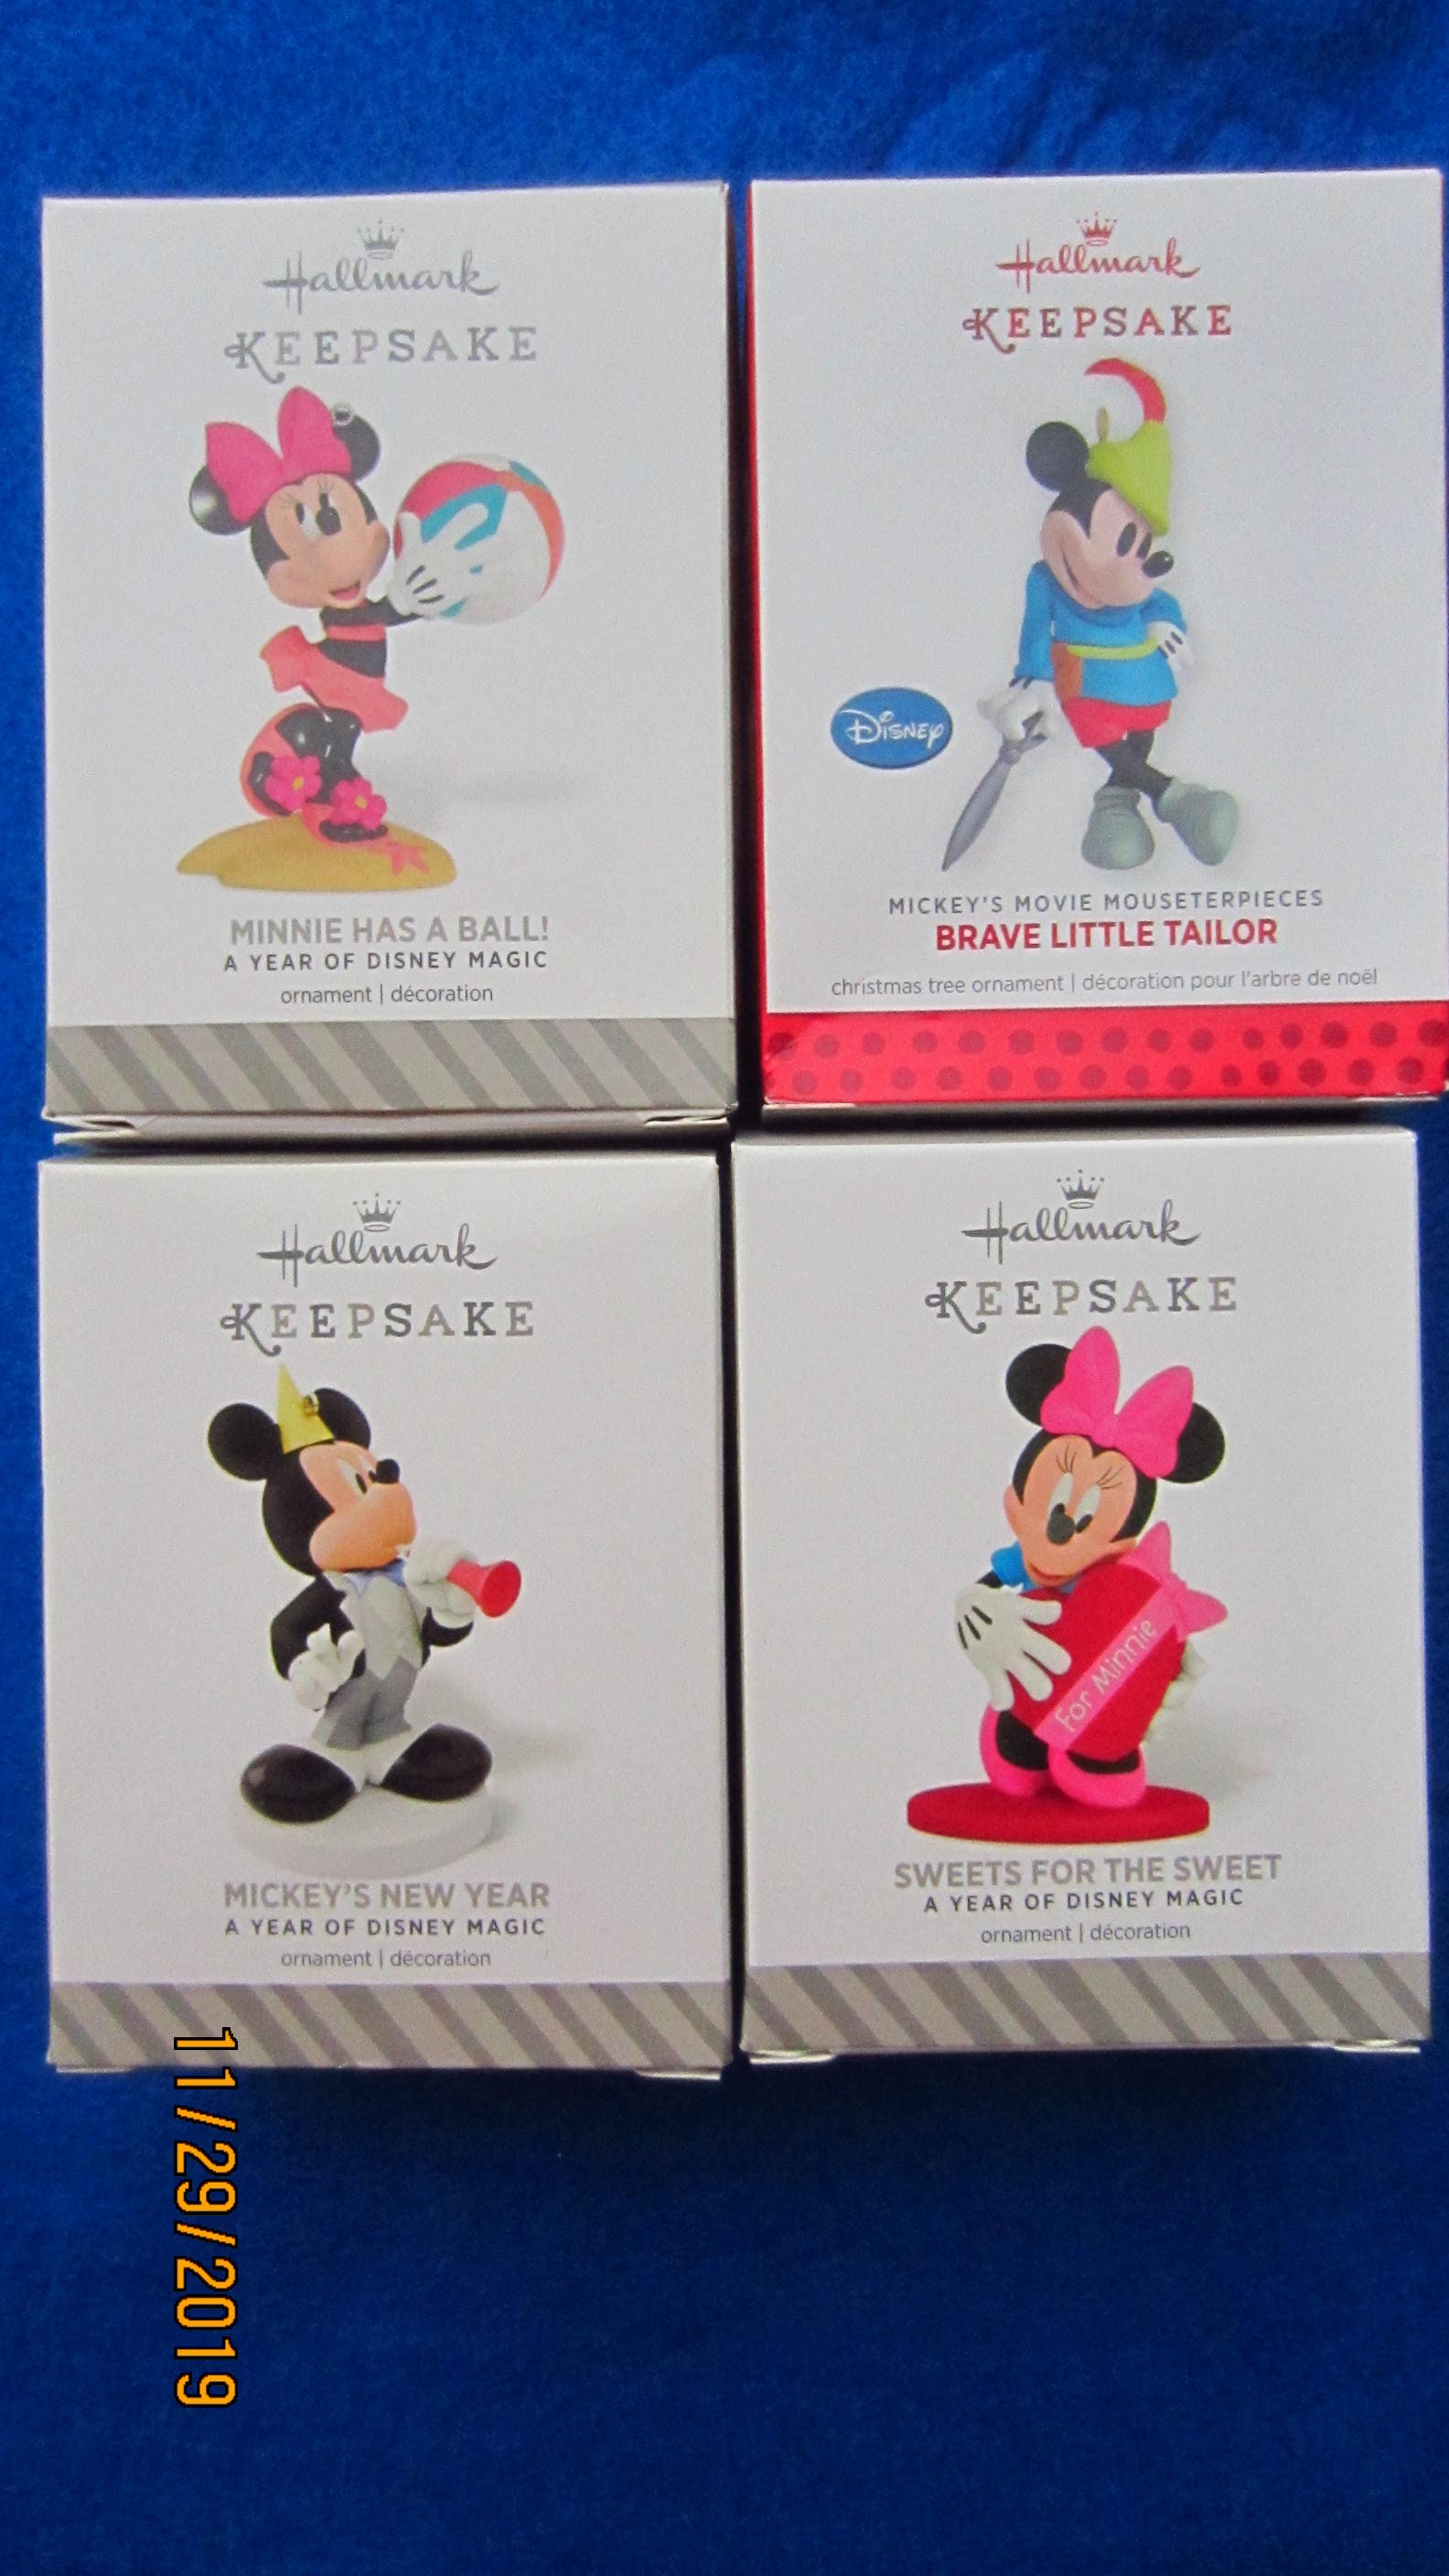 2023 2024 Disney Mickey Minnie Mouse Noël Arbre Décoration